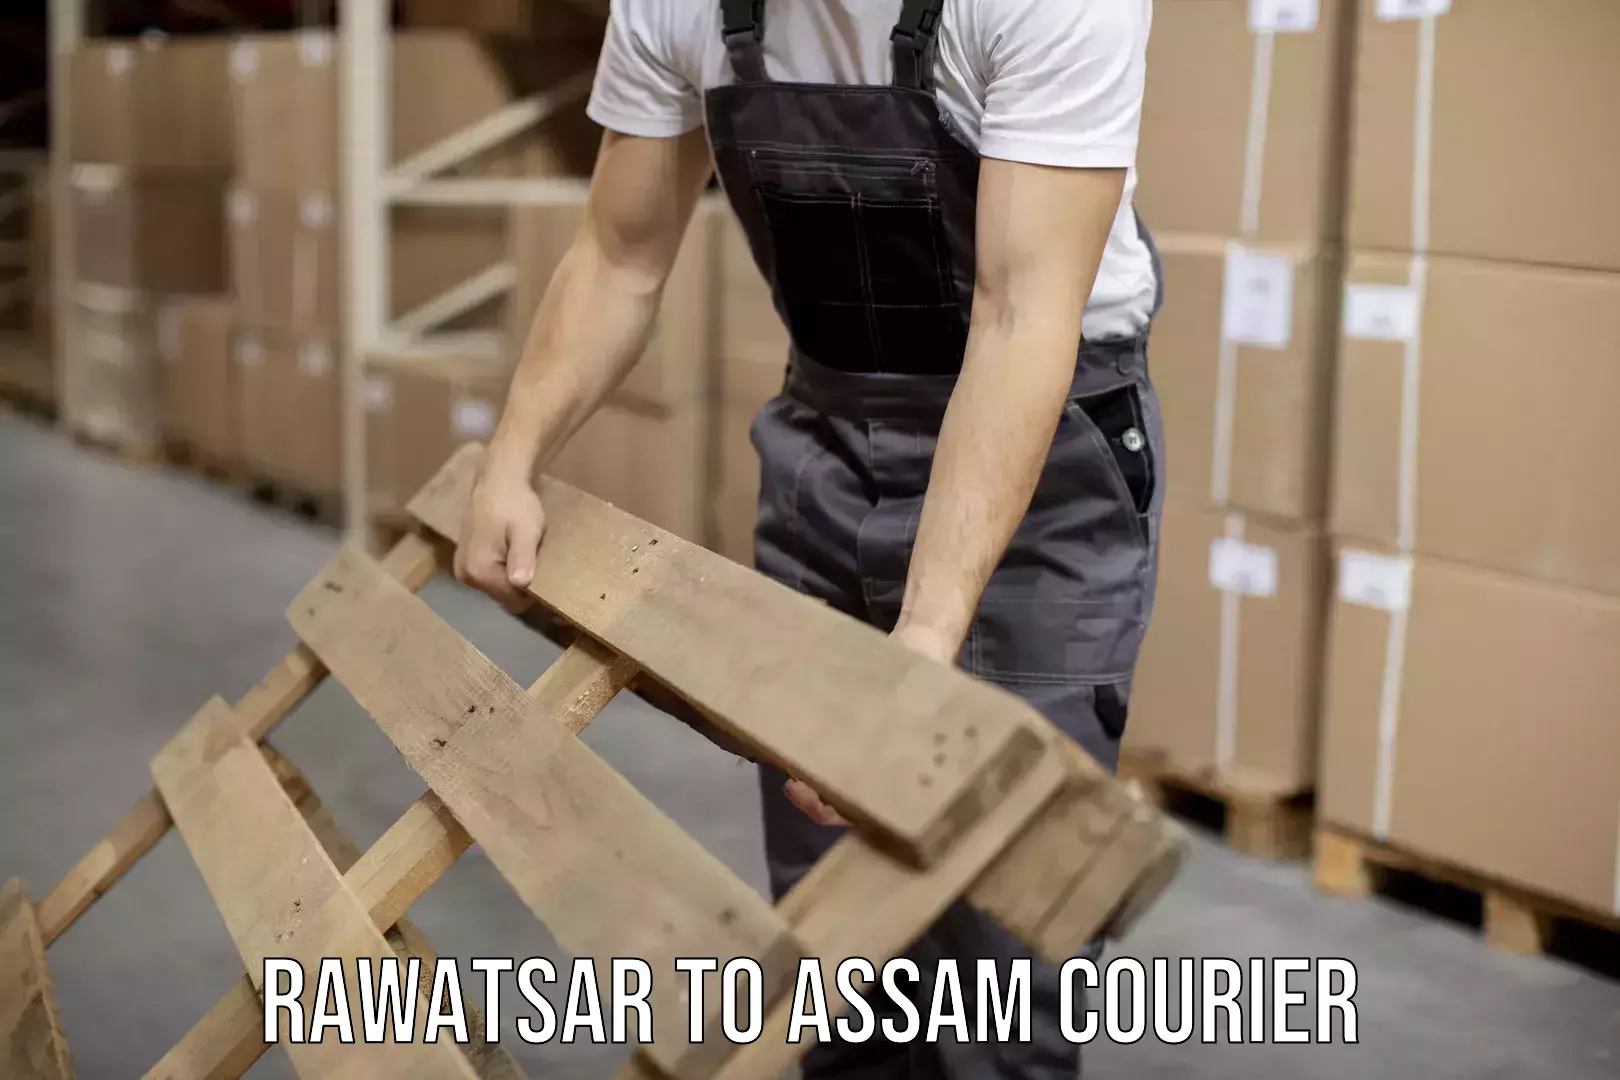 Courier service partnerships Rawatsar to Jorhat